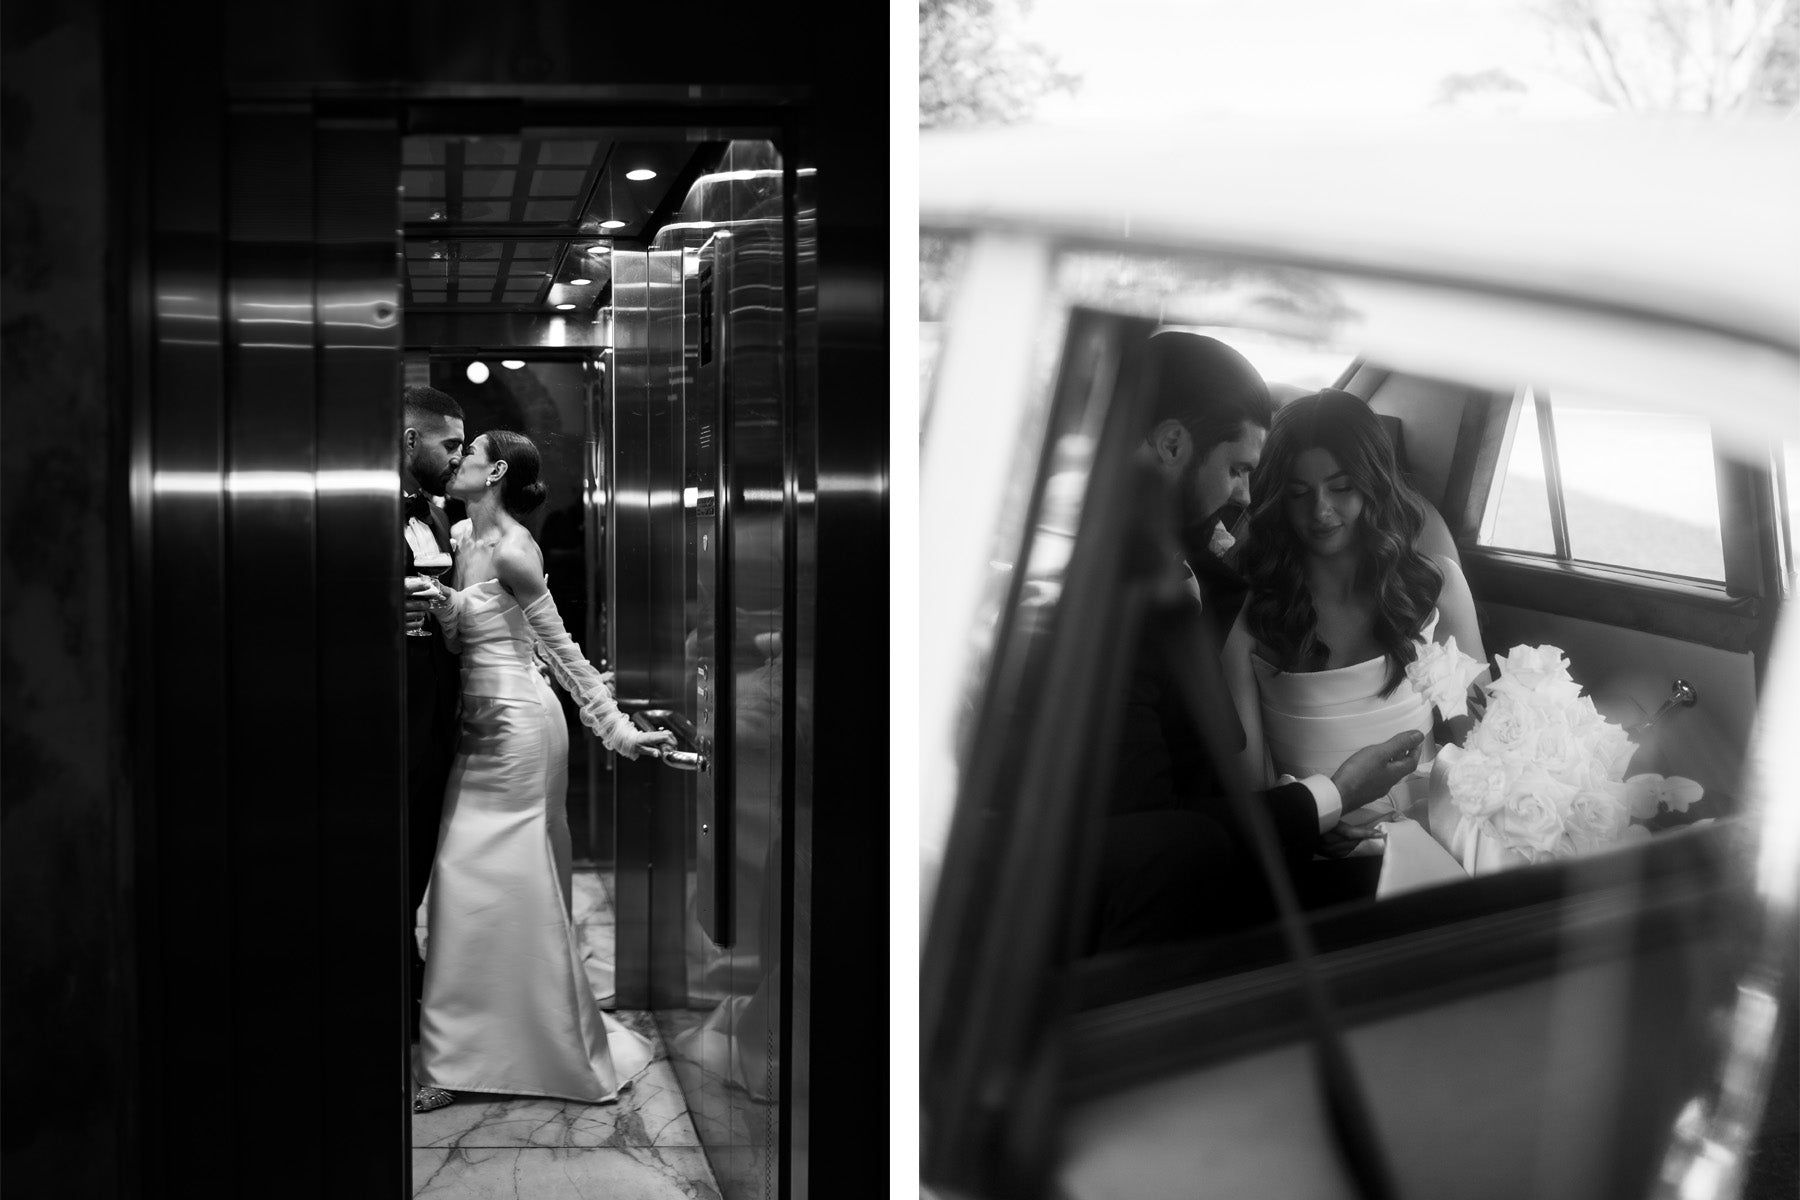 Eternal-bridal-wedding-vendor-interview-muse-photography-10